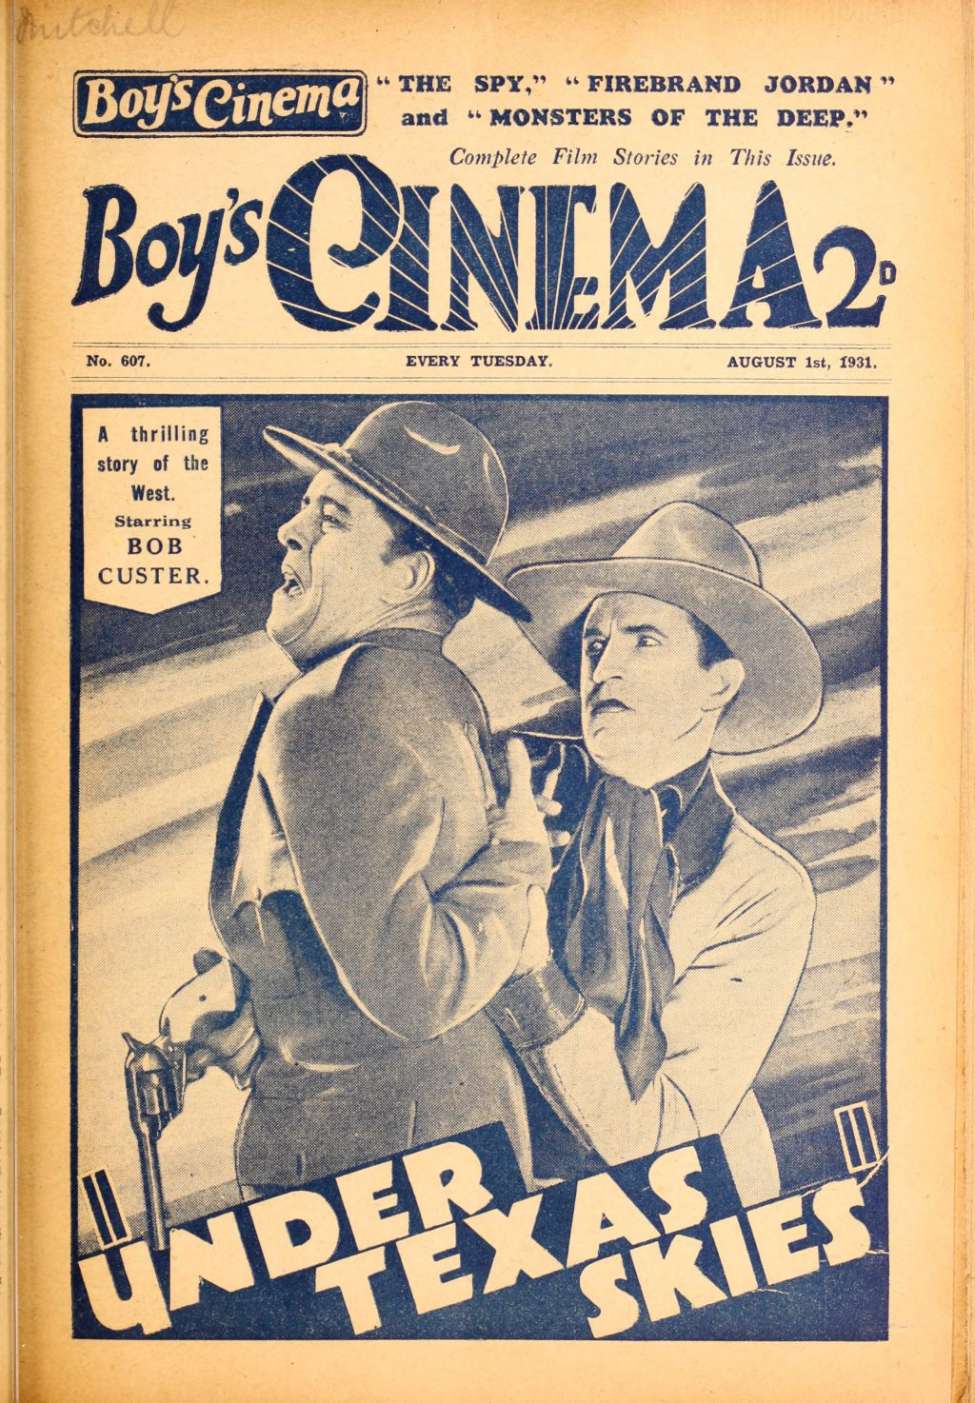 Comic Book Cover For Boy's Cinema 607 - Under Texas Skies - Bob Custer